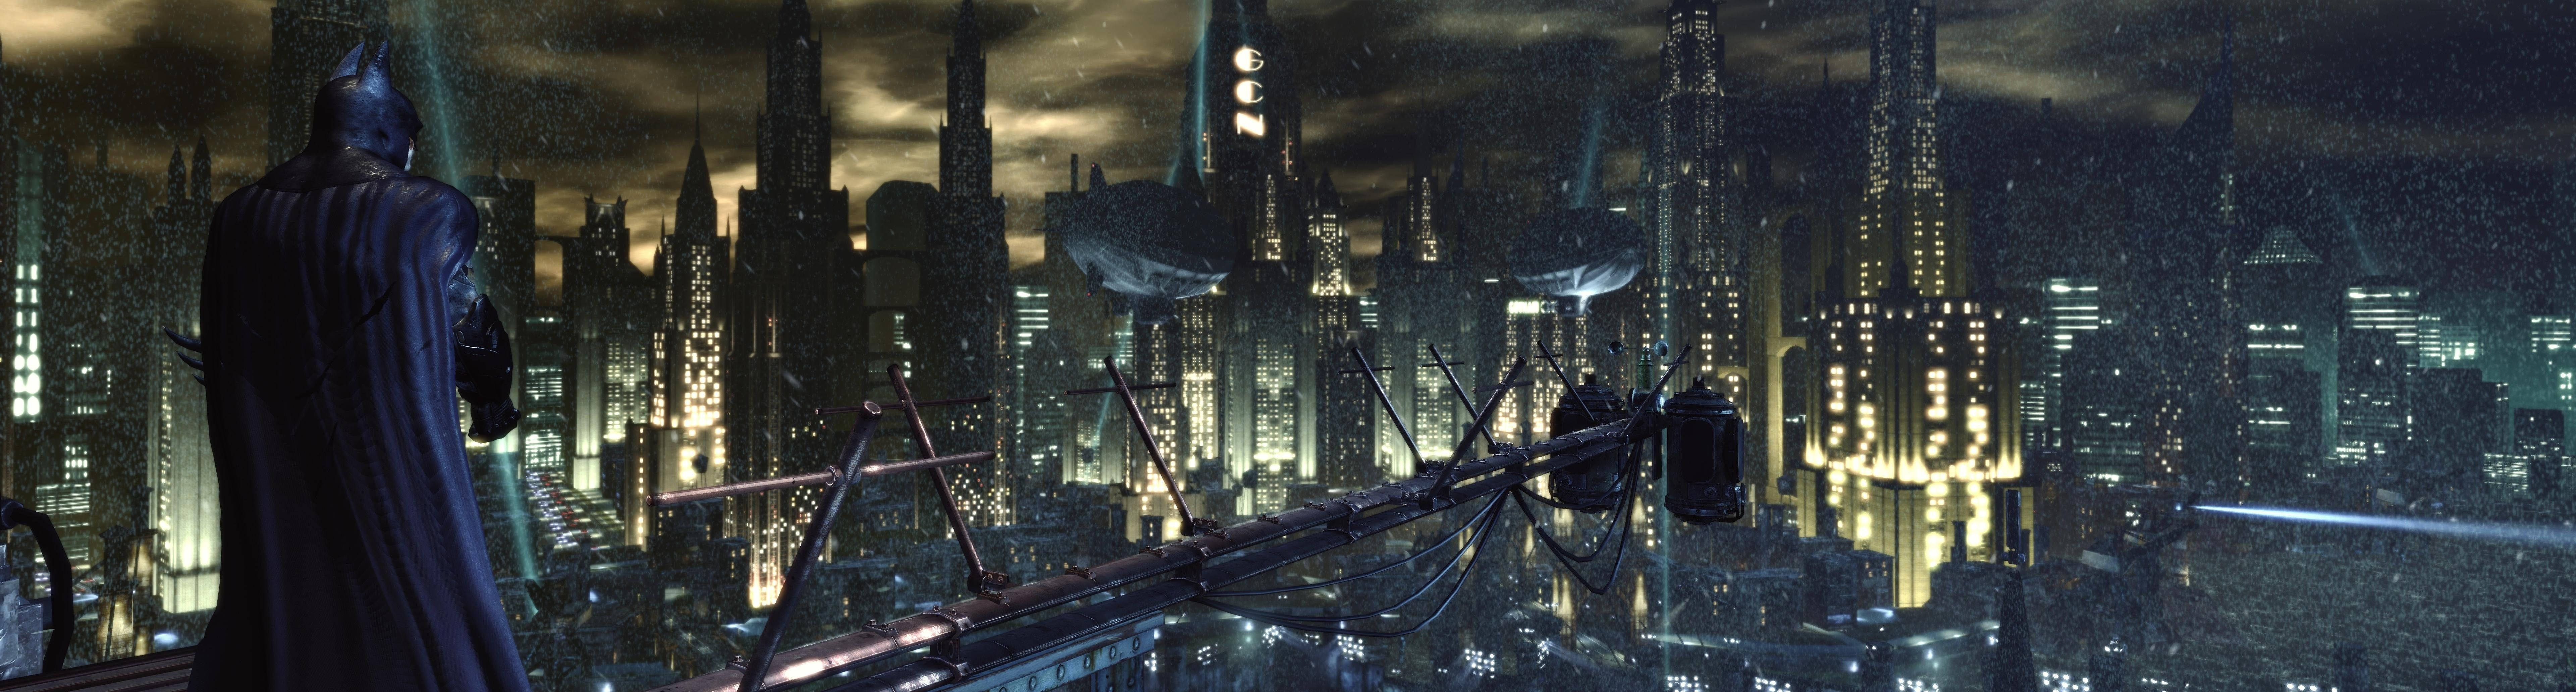 4k Dual Monitor Batman Overlooking Gotham City Background